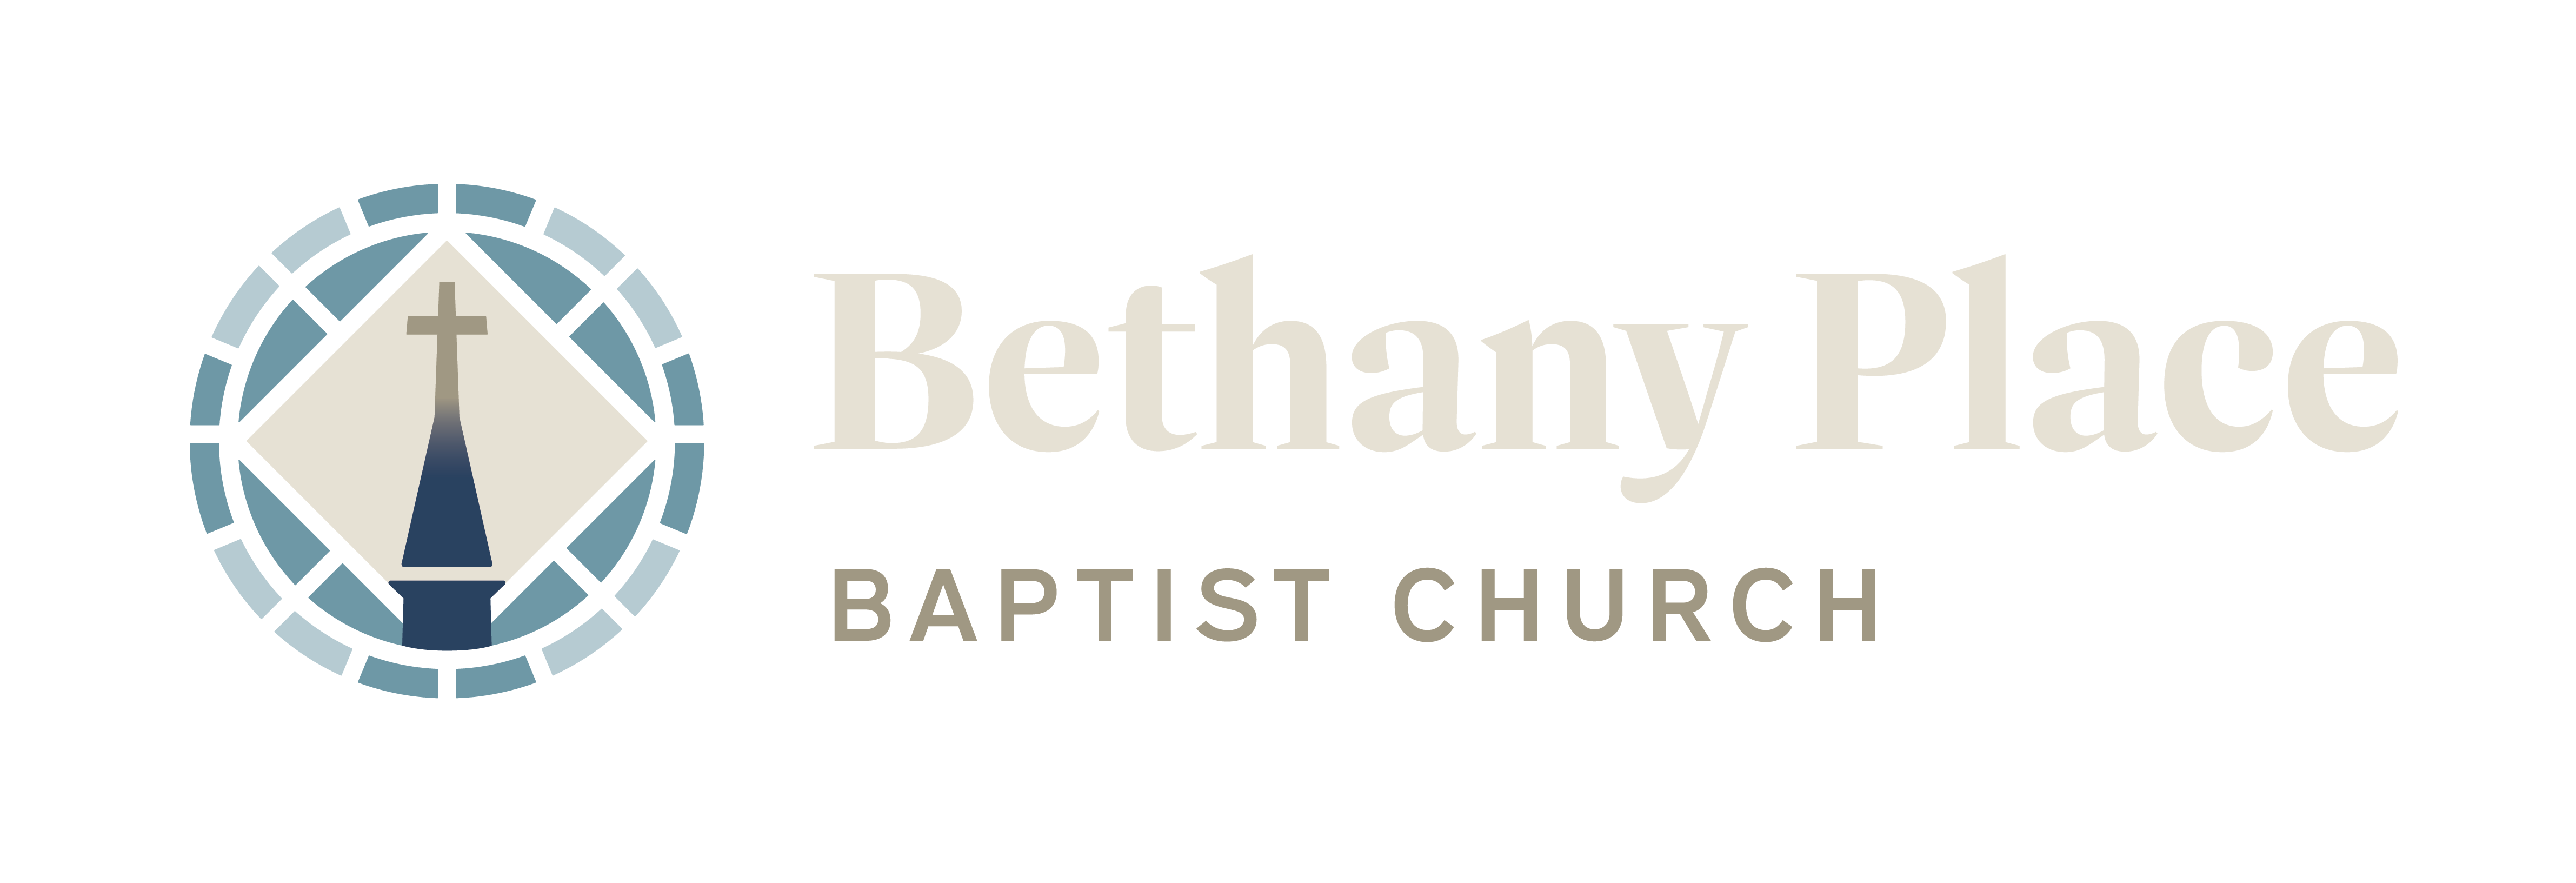 Bethany Place Baptist Church